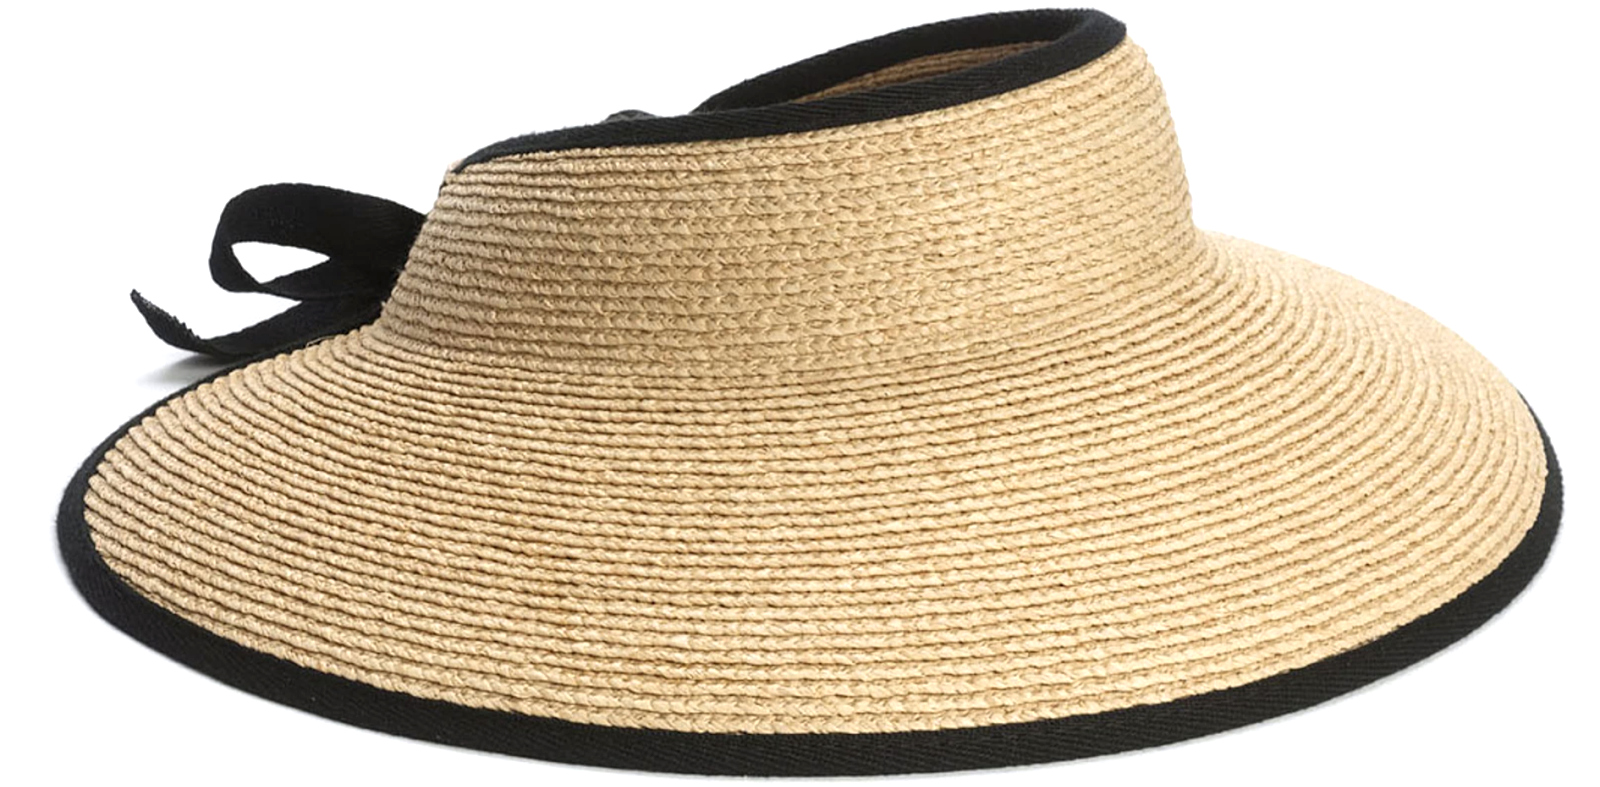 Accessories Hats & Caps Sun Hats & Visors Sun Hats Adjustable rough hedge large summer sun beach straw hats Large brim beach Hats women 55cm 